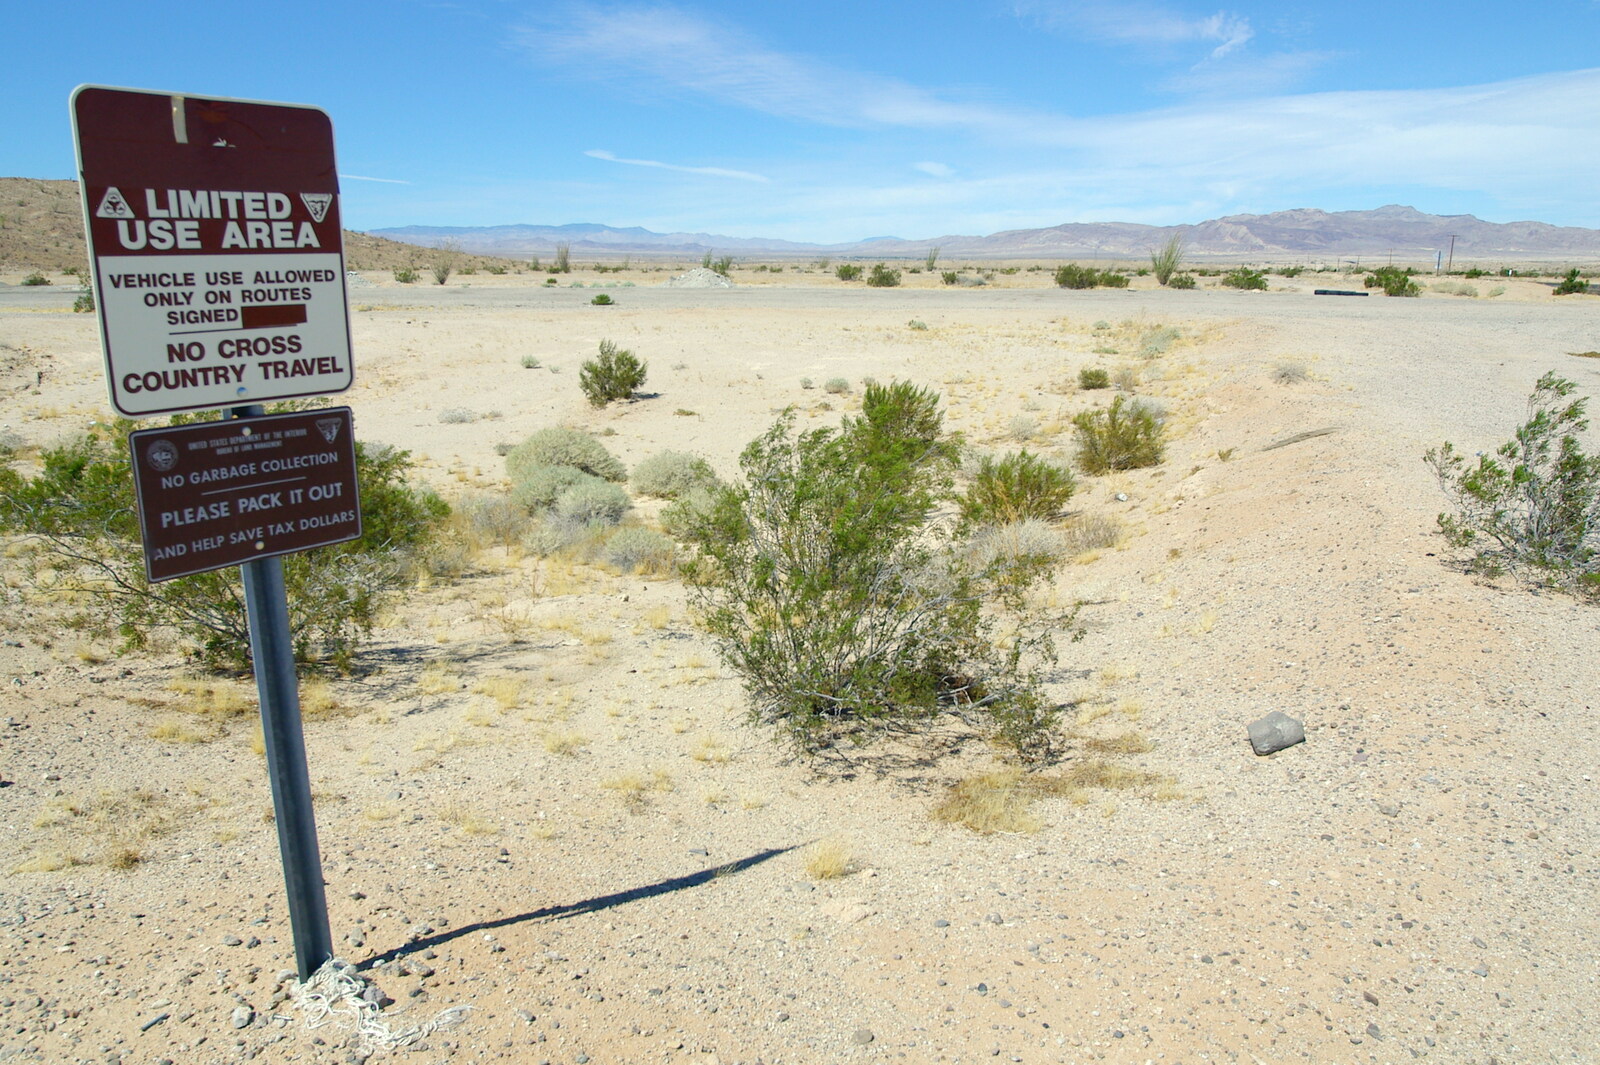 Restrictions in the desert from California Desert: El Centro, Imperial Valley, California, US - 24th September 2005